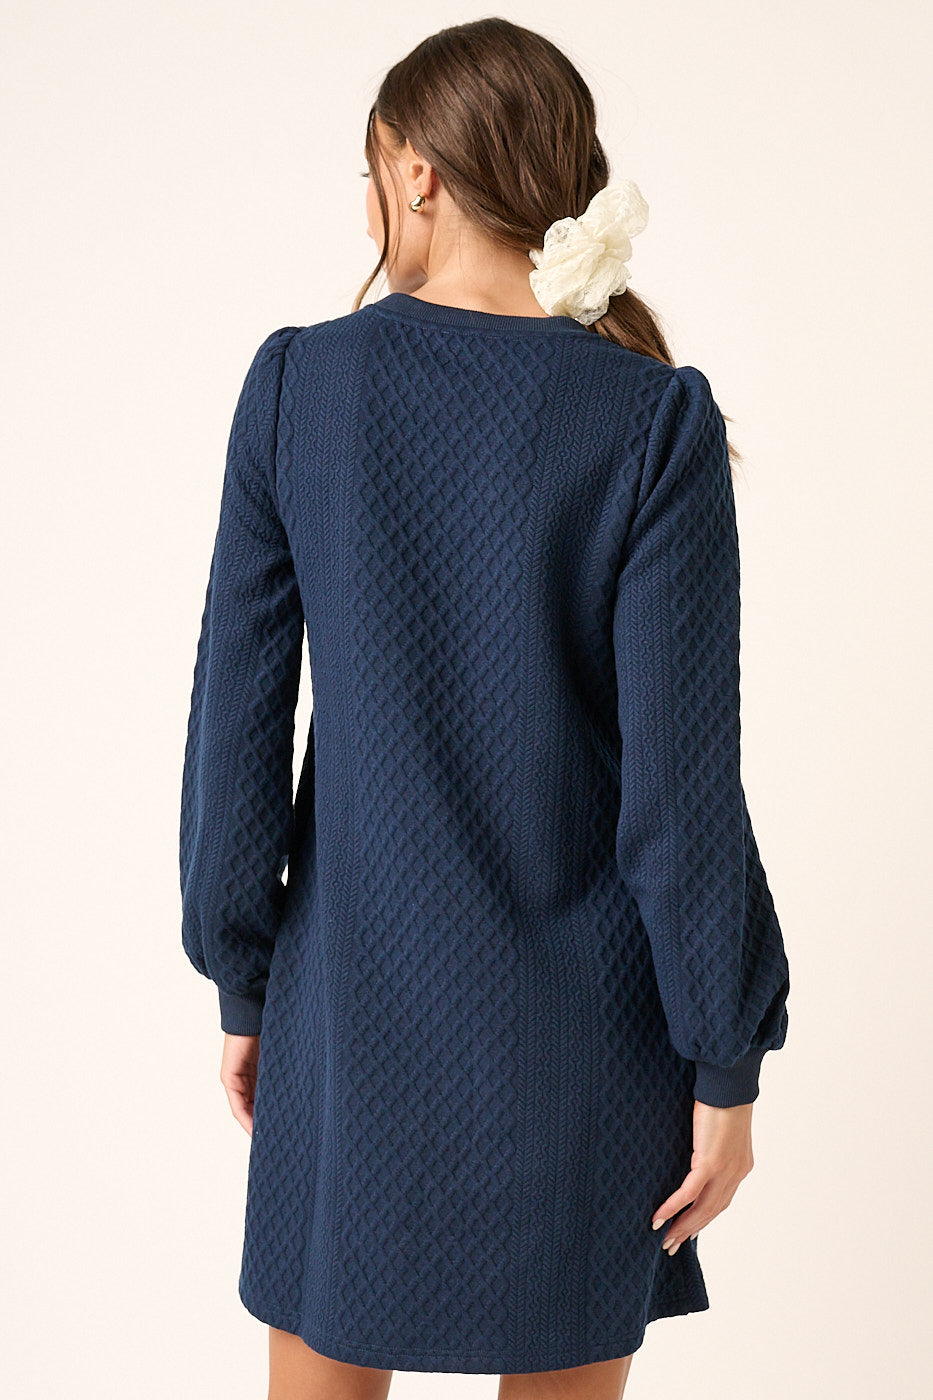 Beatrice Textured Sweatshirt Dress